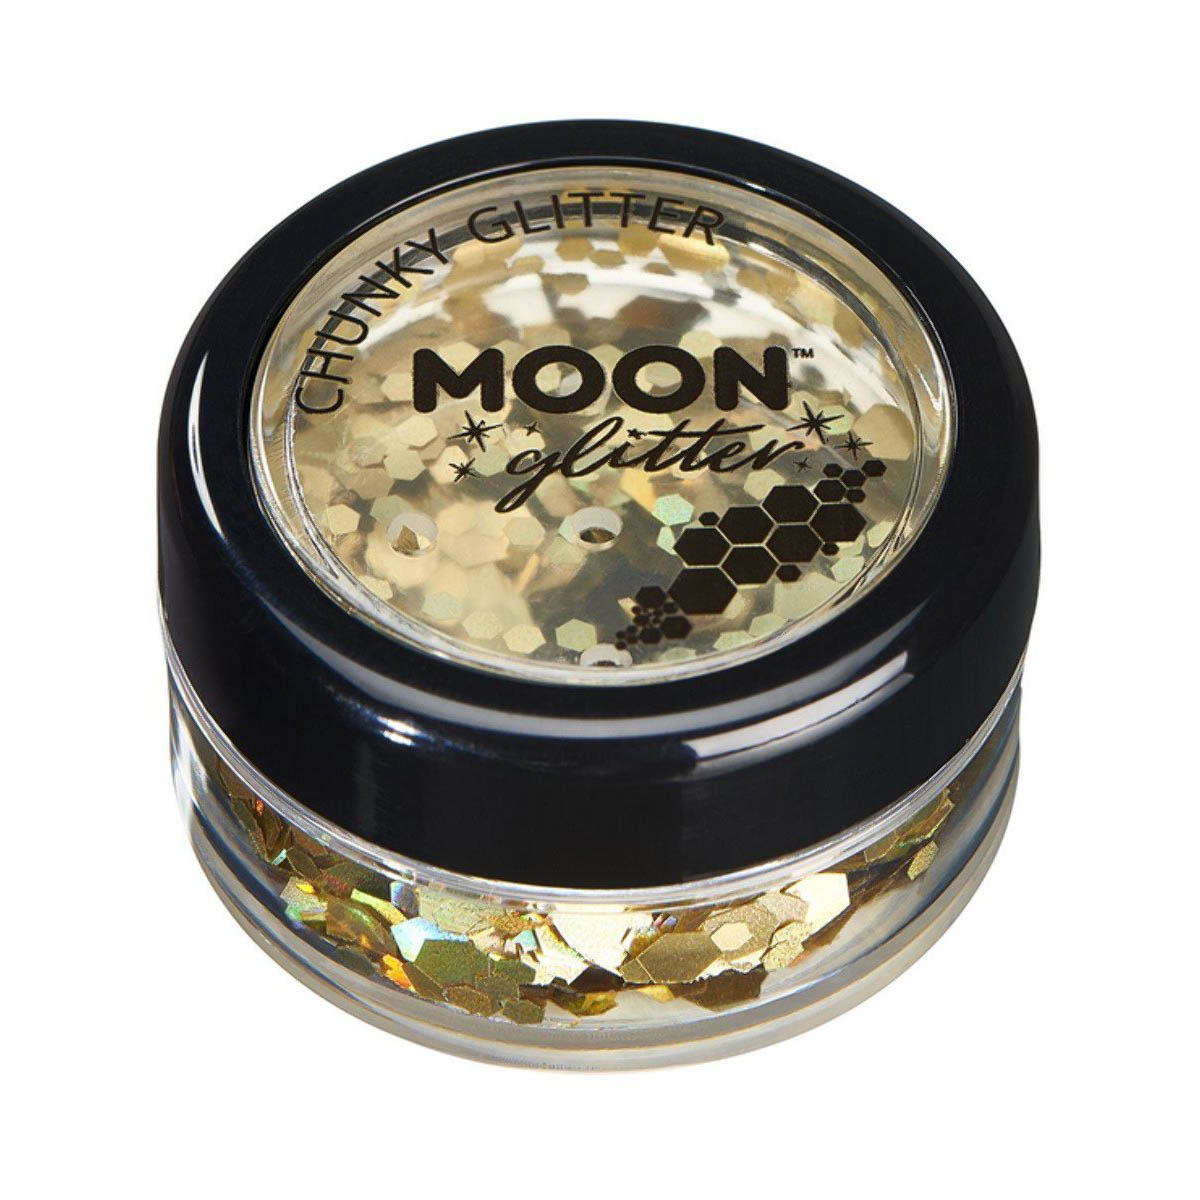 Moon glitter i burk, chunky holografisk 3g Guld